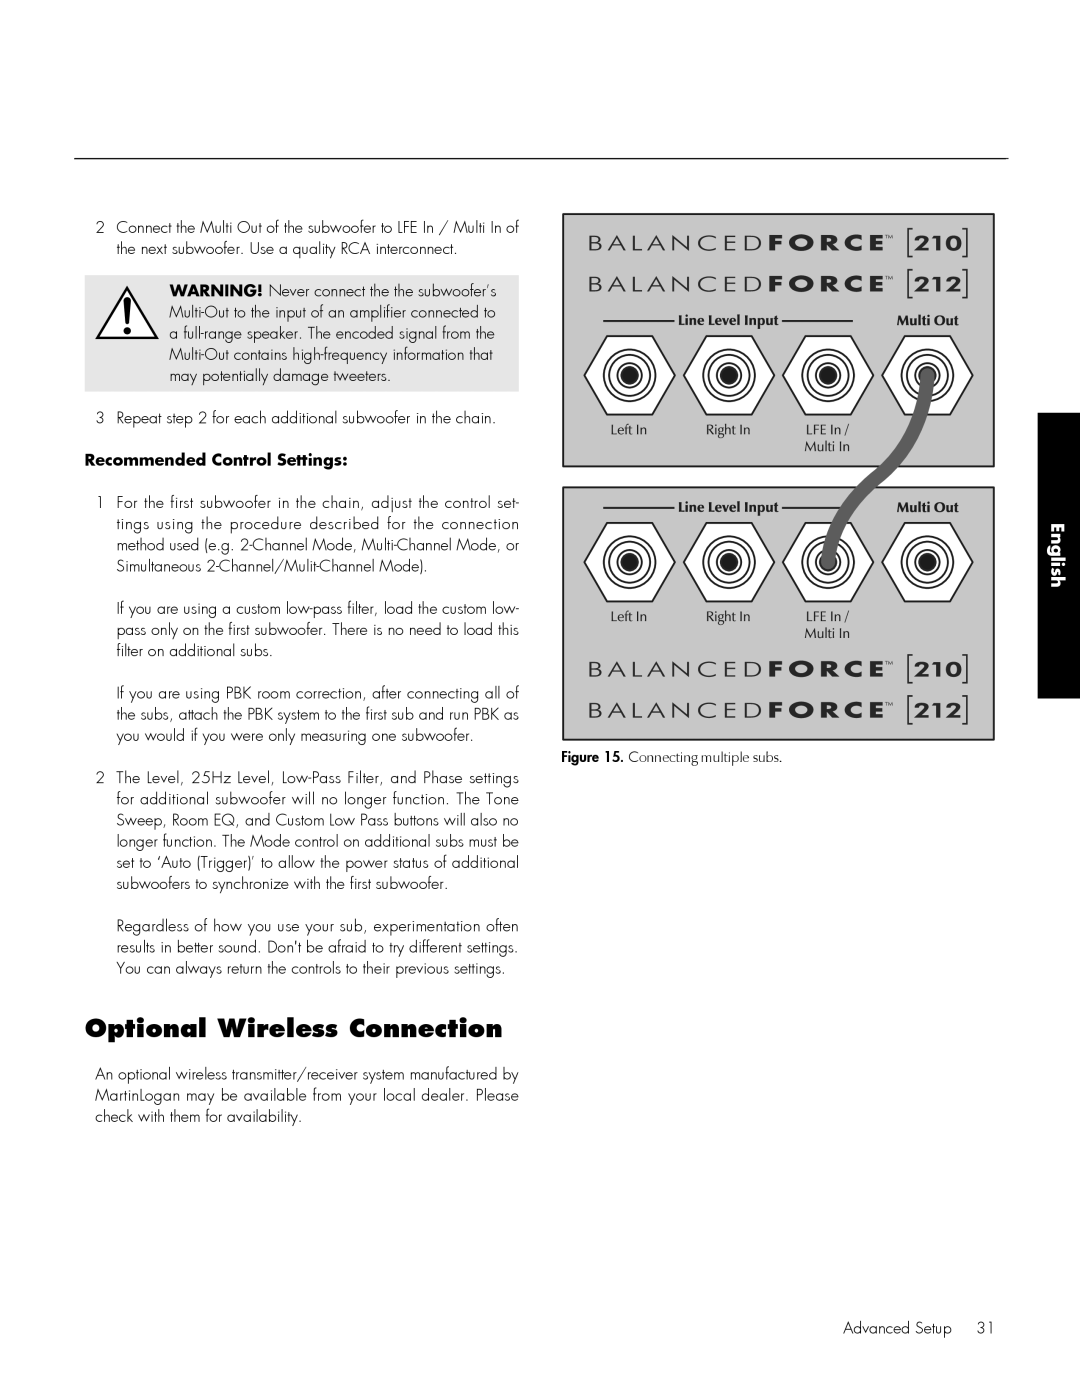 MartinLogan 212, 210 user manual Optional Wireless Connection, English 